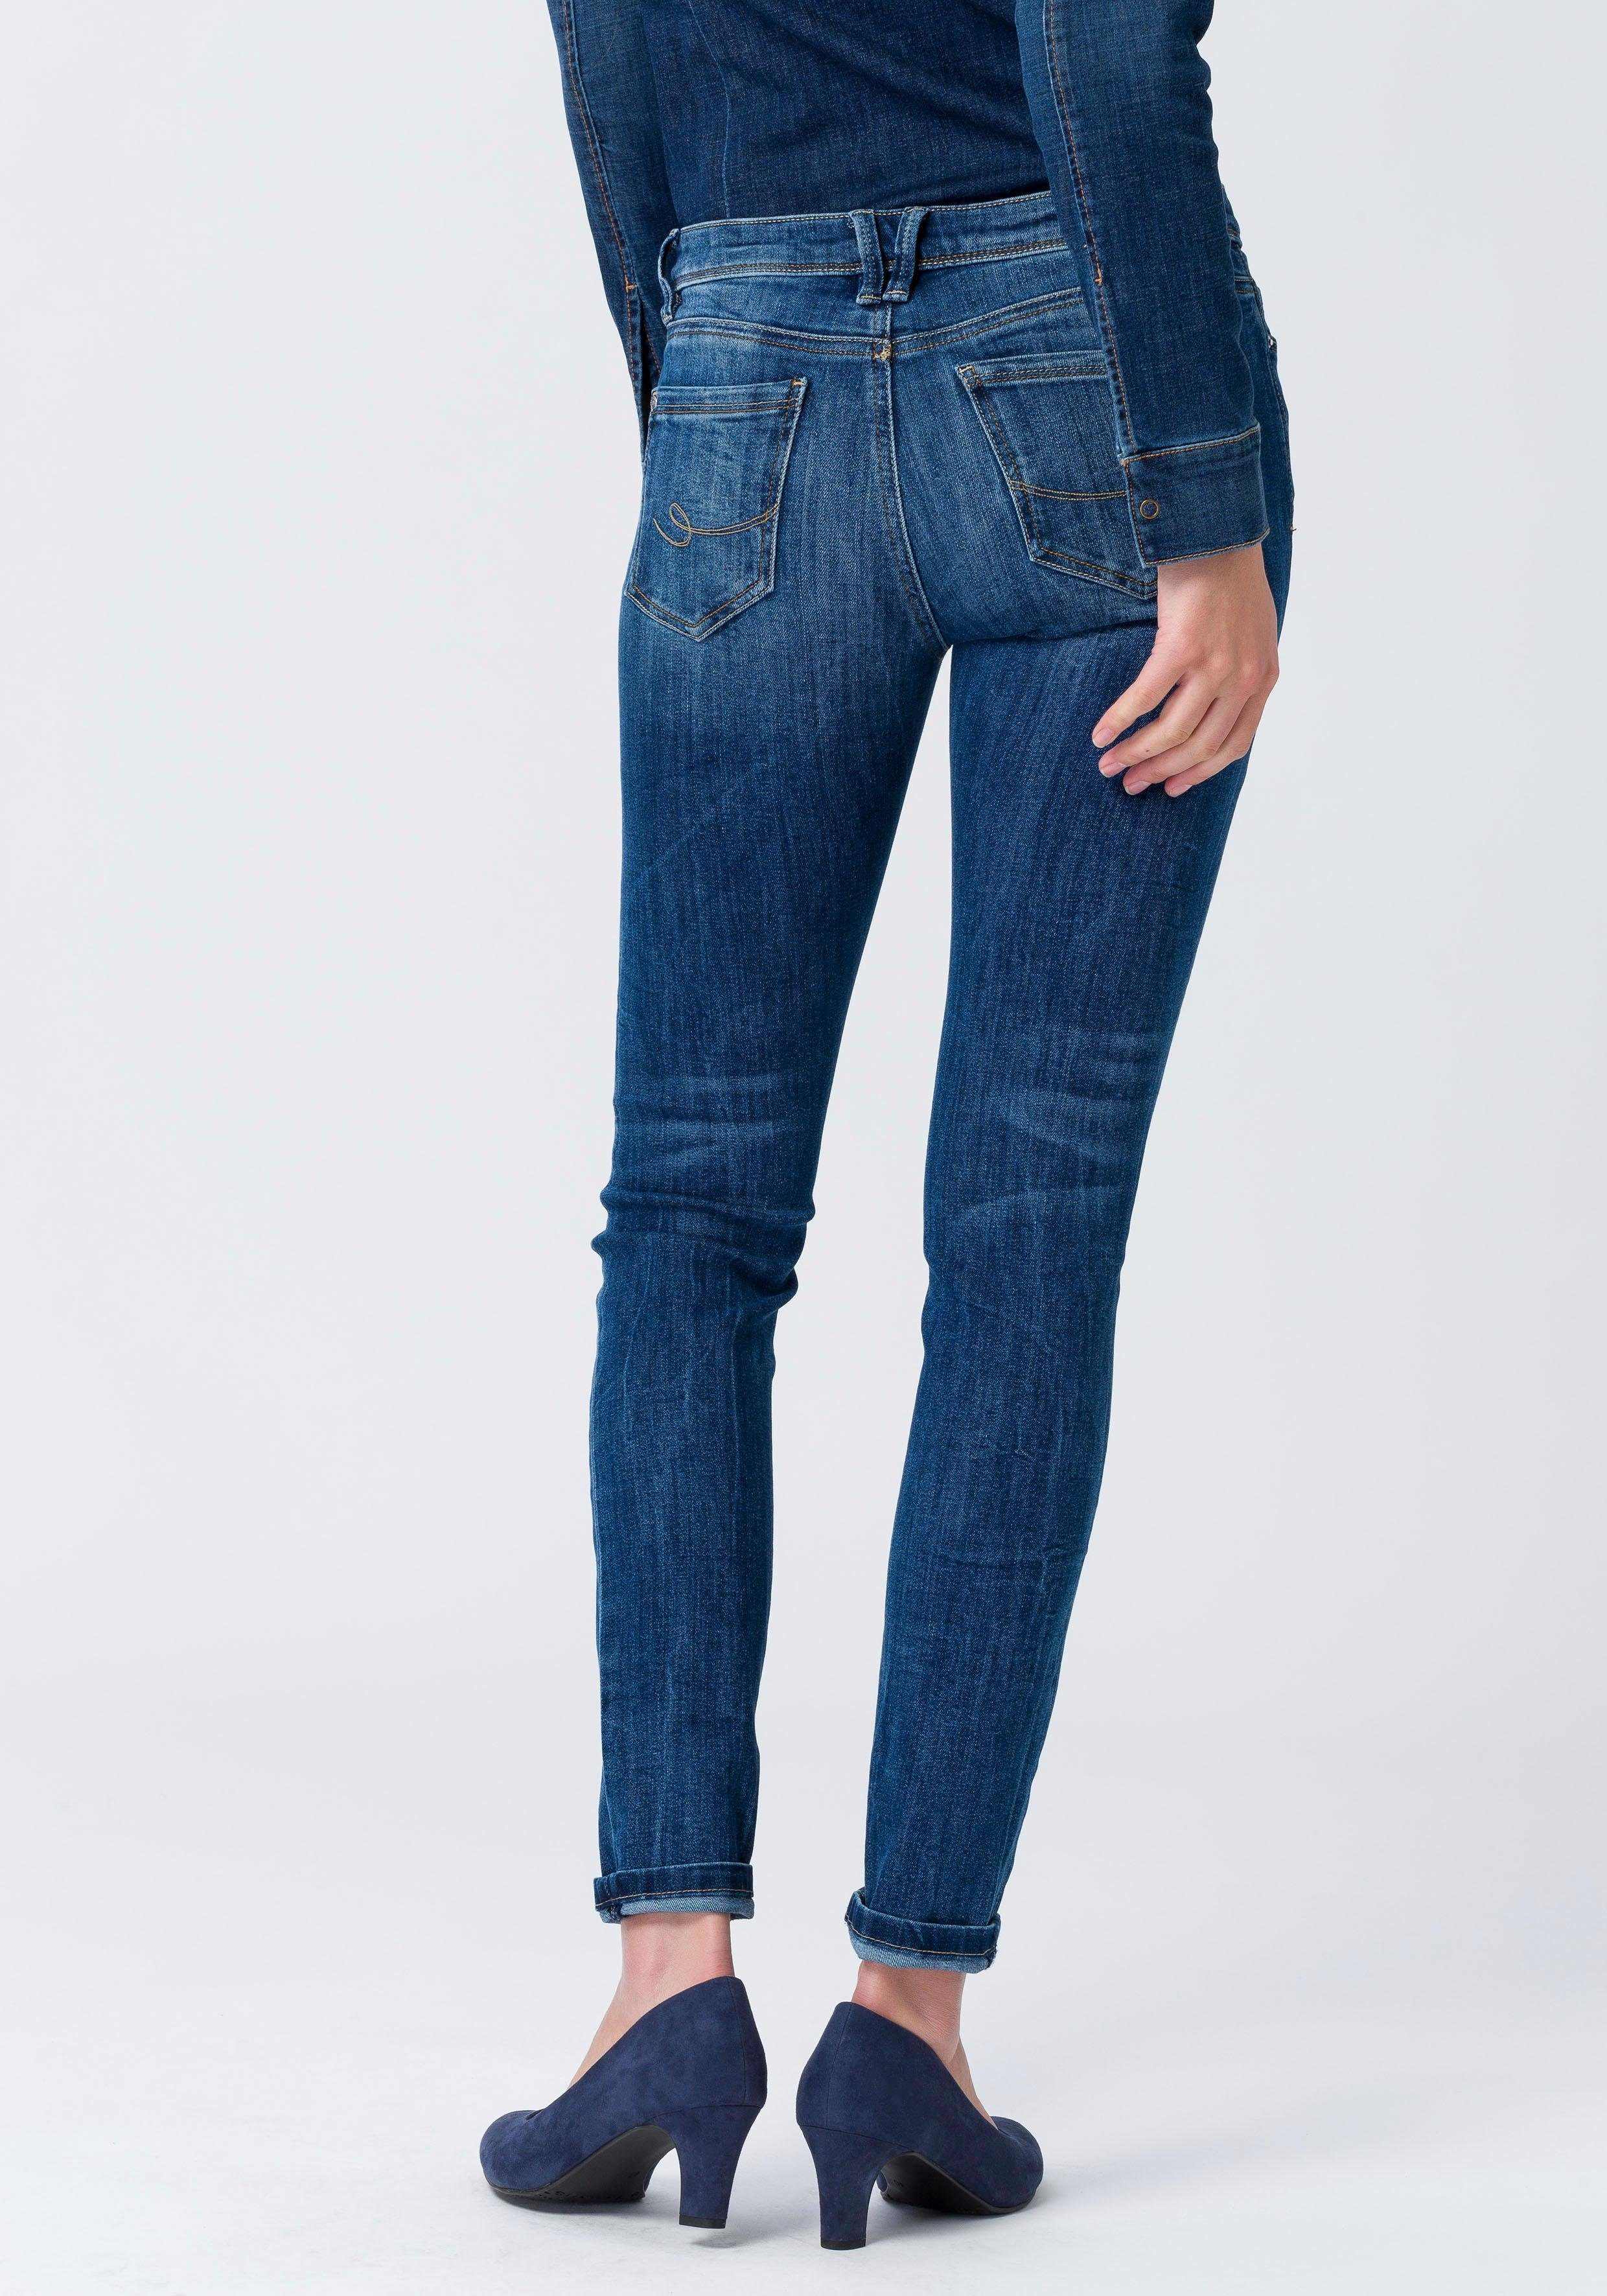 Otto - Esprit NU 15% KORTING: edc stretch jeans